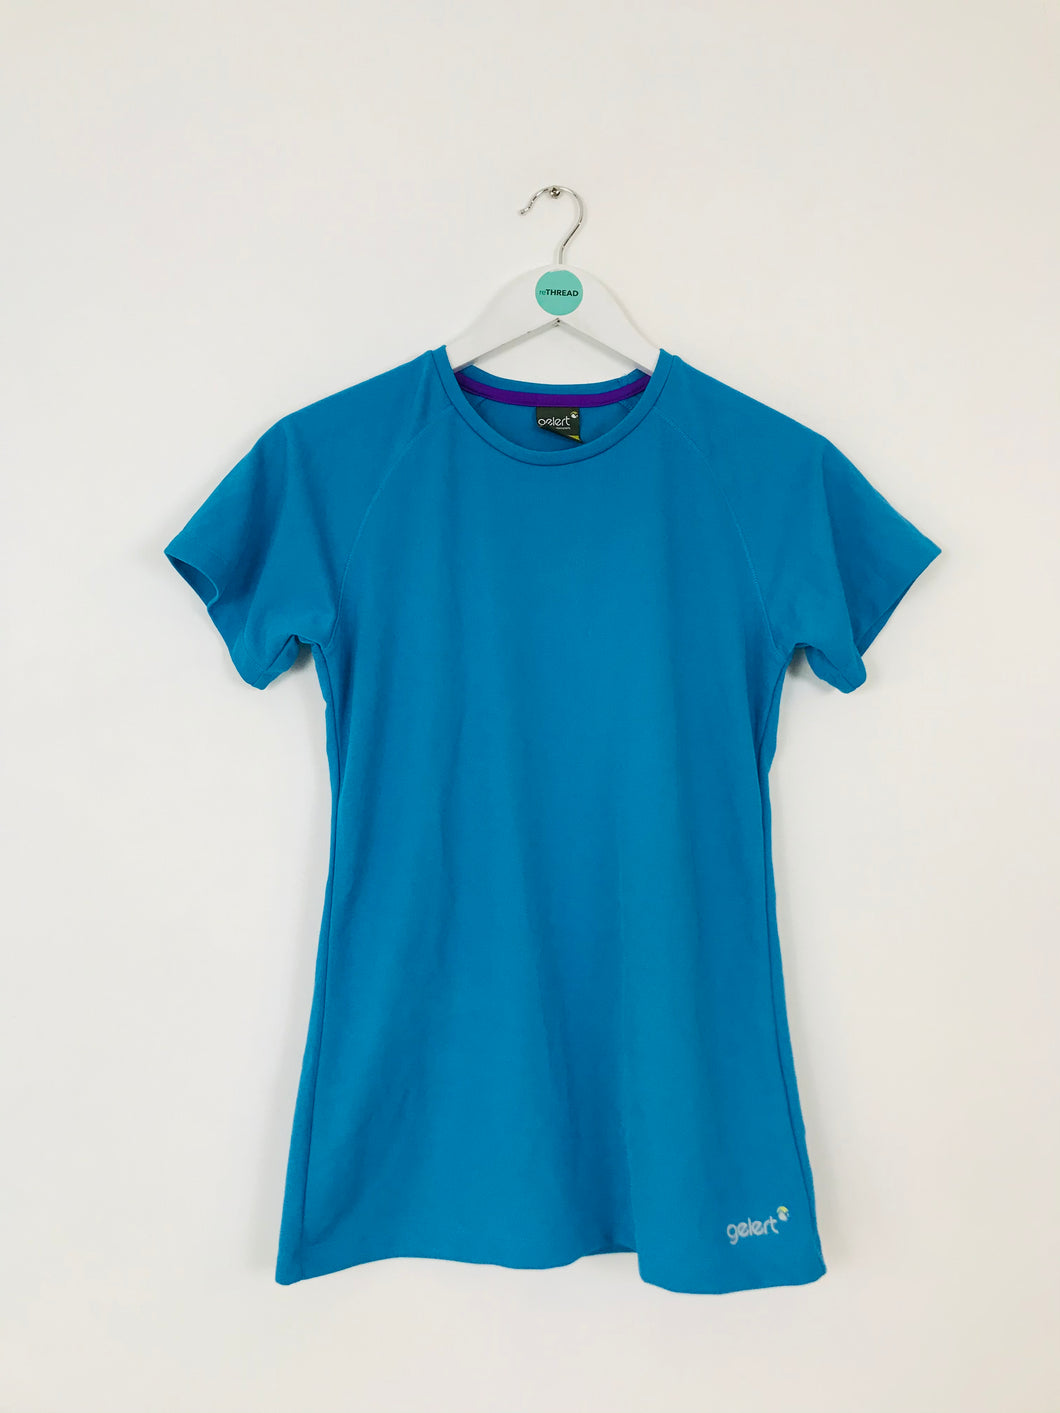 Gelert Kid’s Sports Top Active T-Shirt | Age 12 | Blue